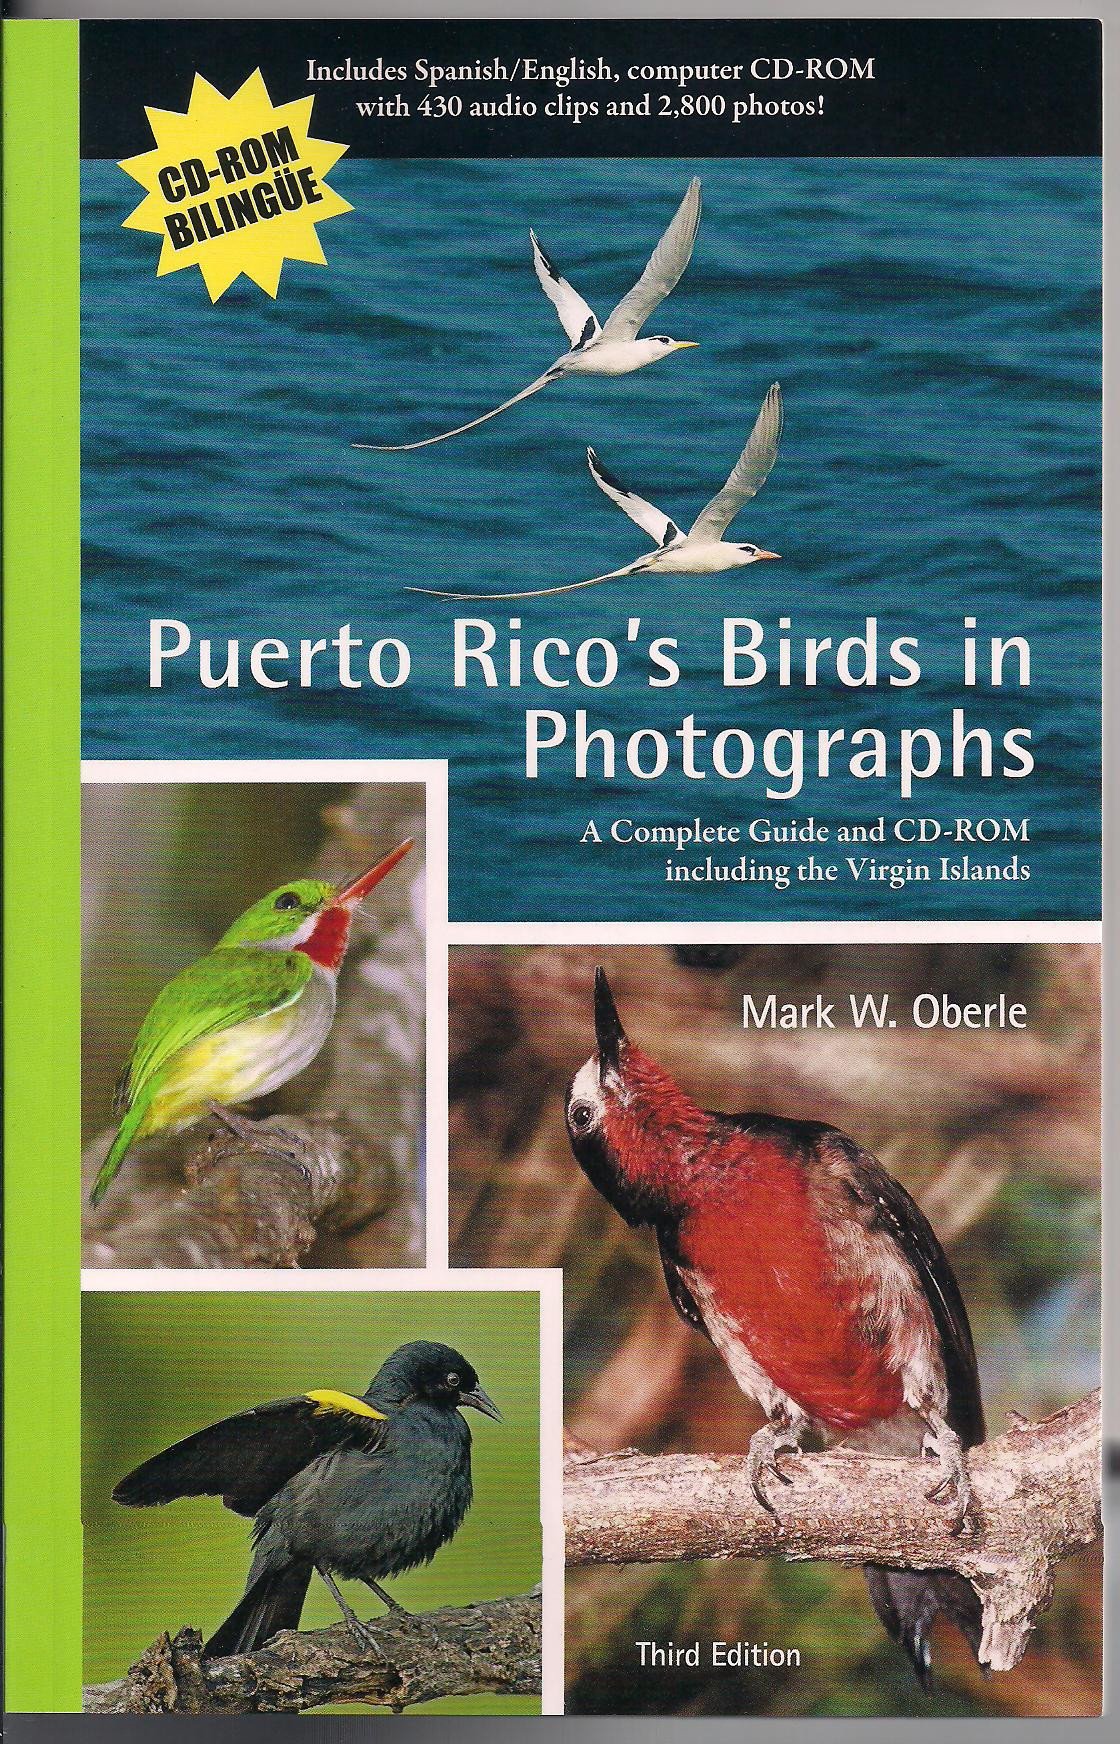 Puerto Rico's Birds in Photographs - Third Edition - D'Autores